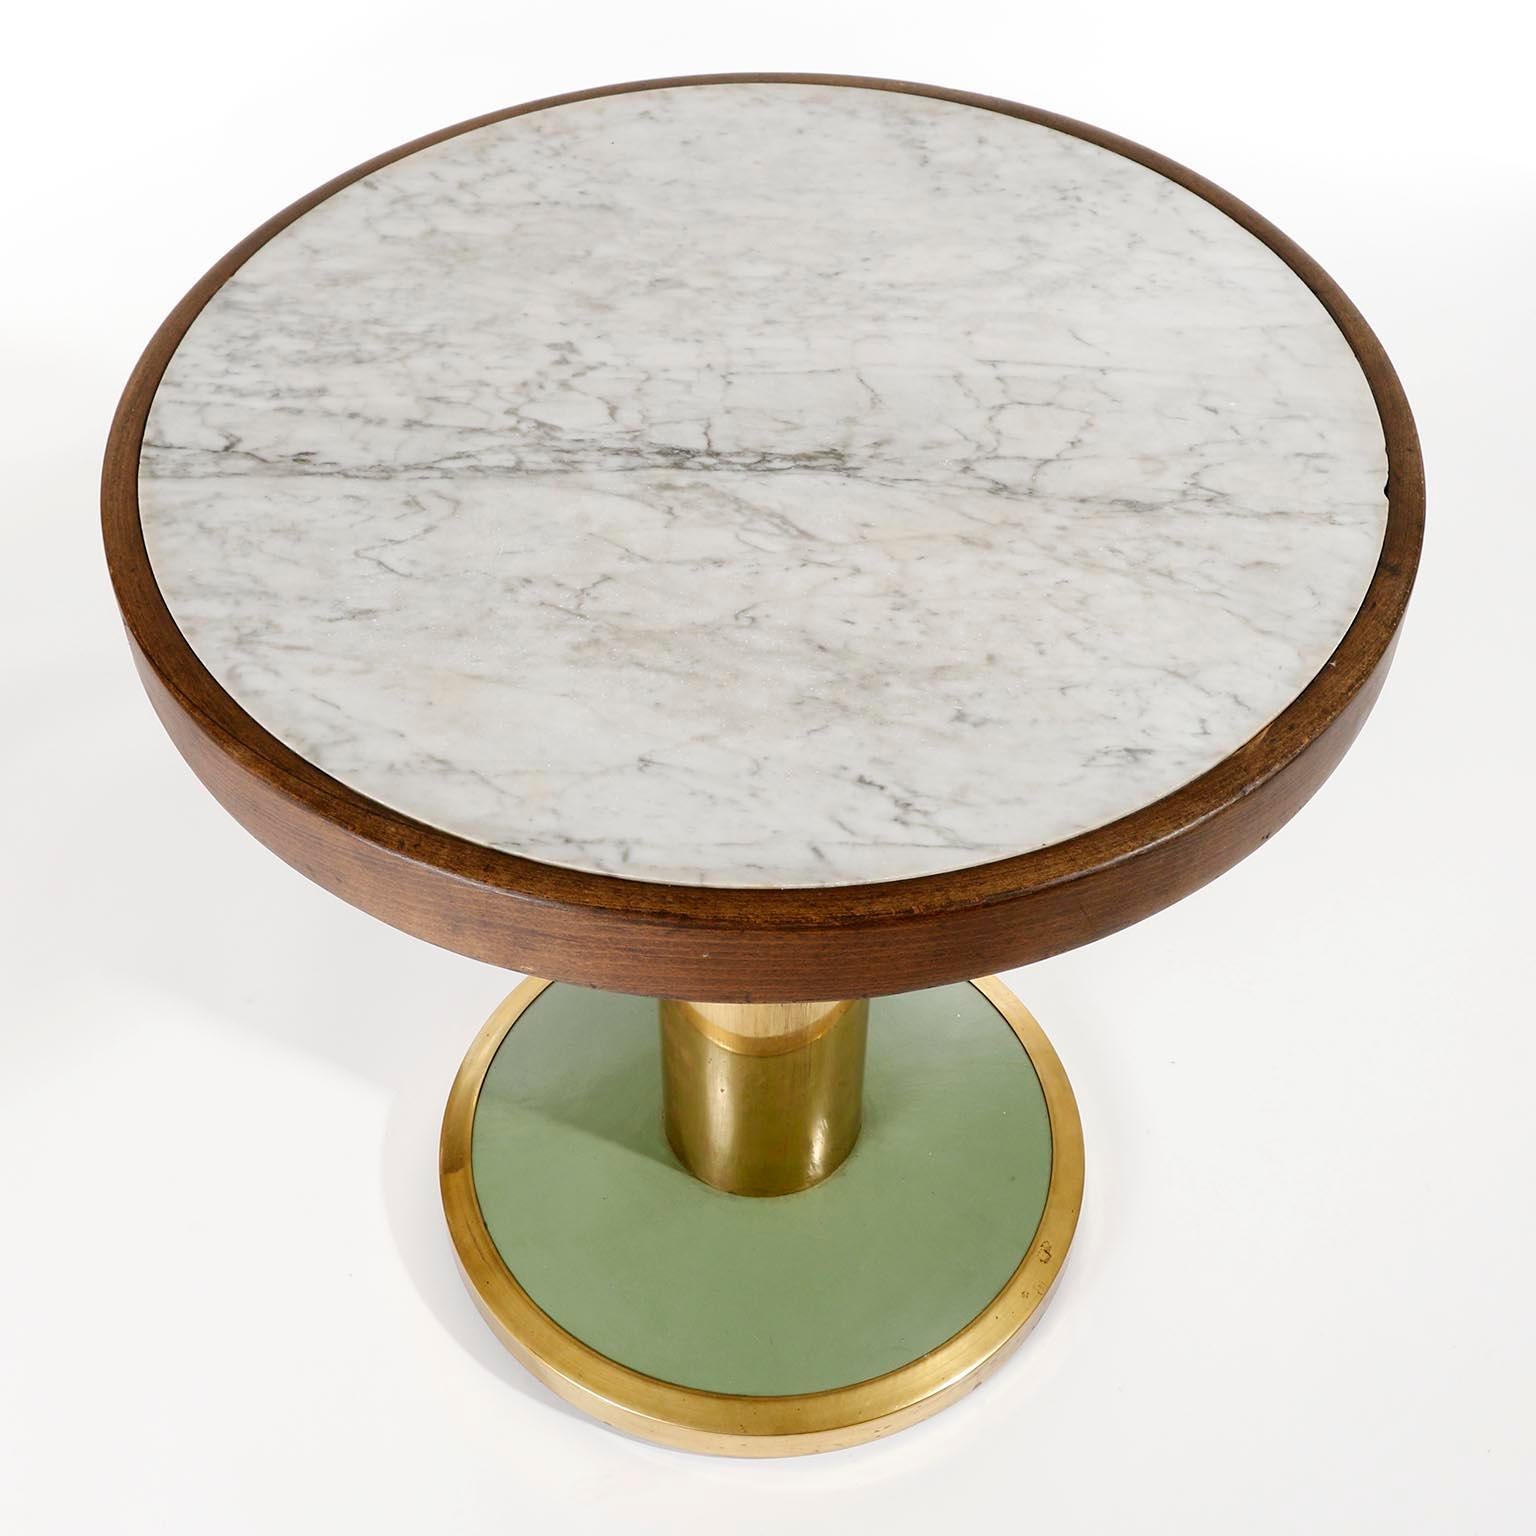 Stained Pedestal Table, Marble Brass Wood Turquoise, Thonet, Austria, Jugendstil, 1910